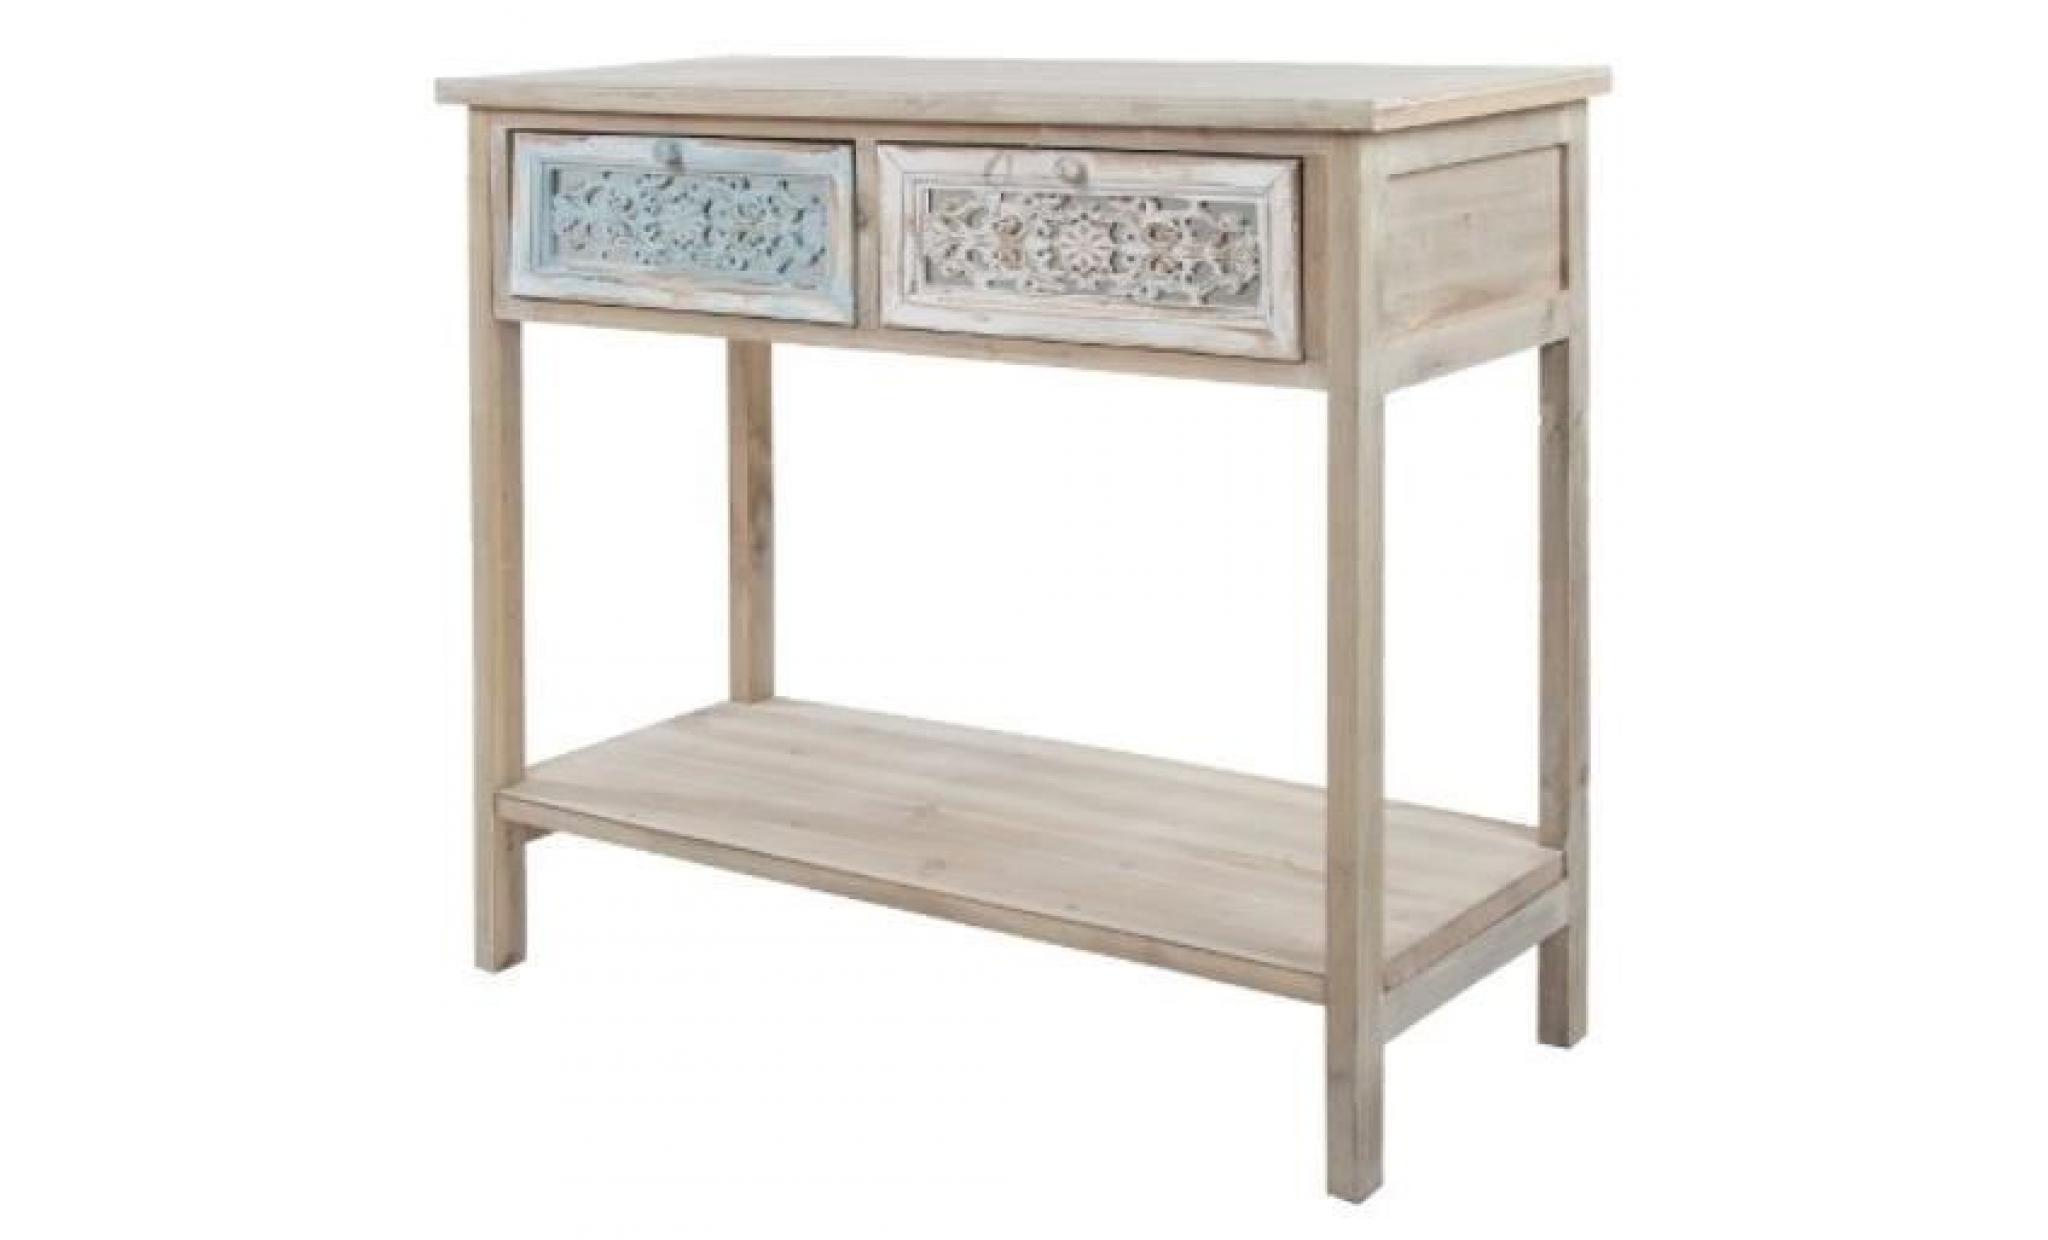 casa padrino console style country blanc antique / naturel 85 x 37 x h. 77 cm   table console shabby chic artisanale avec 2 tiroirs